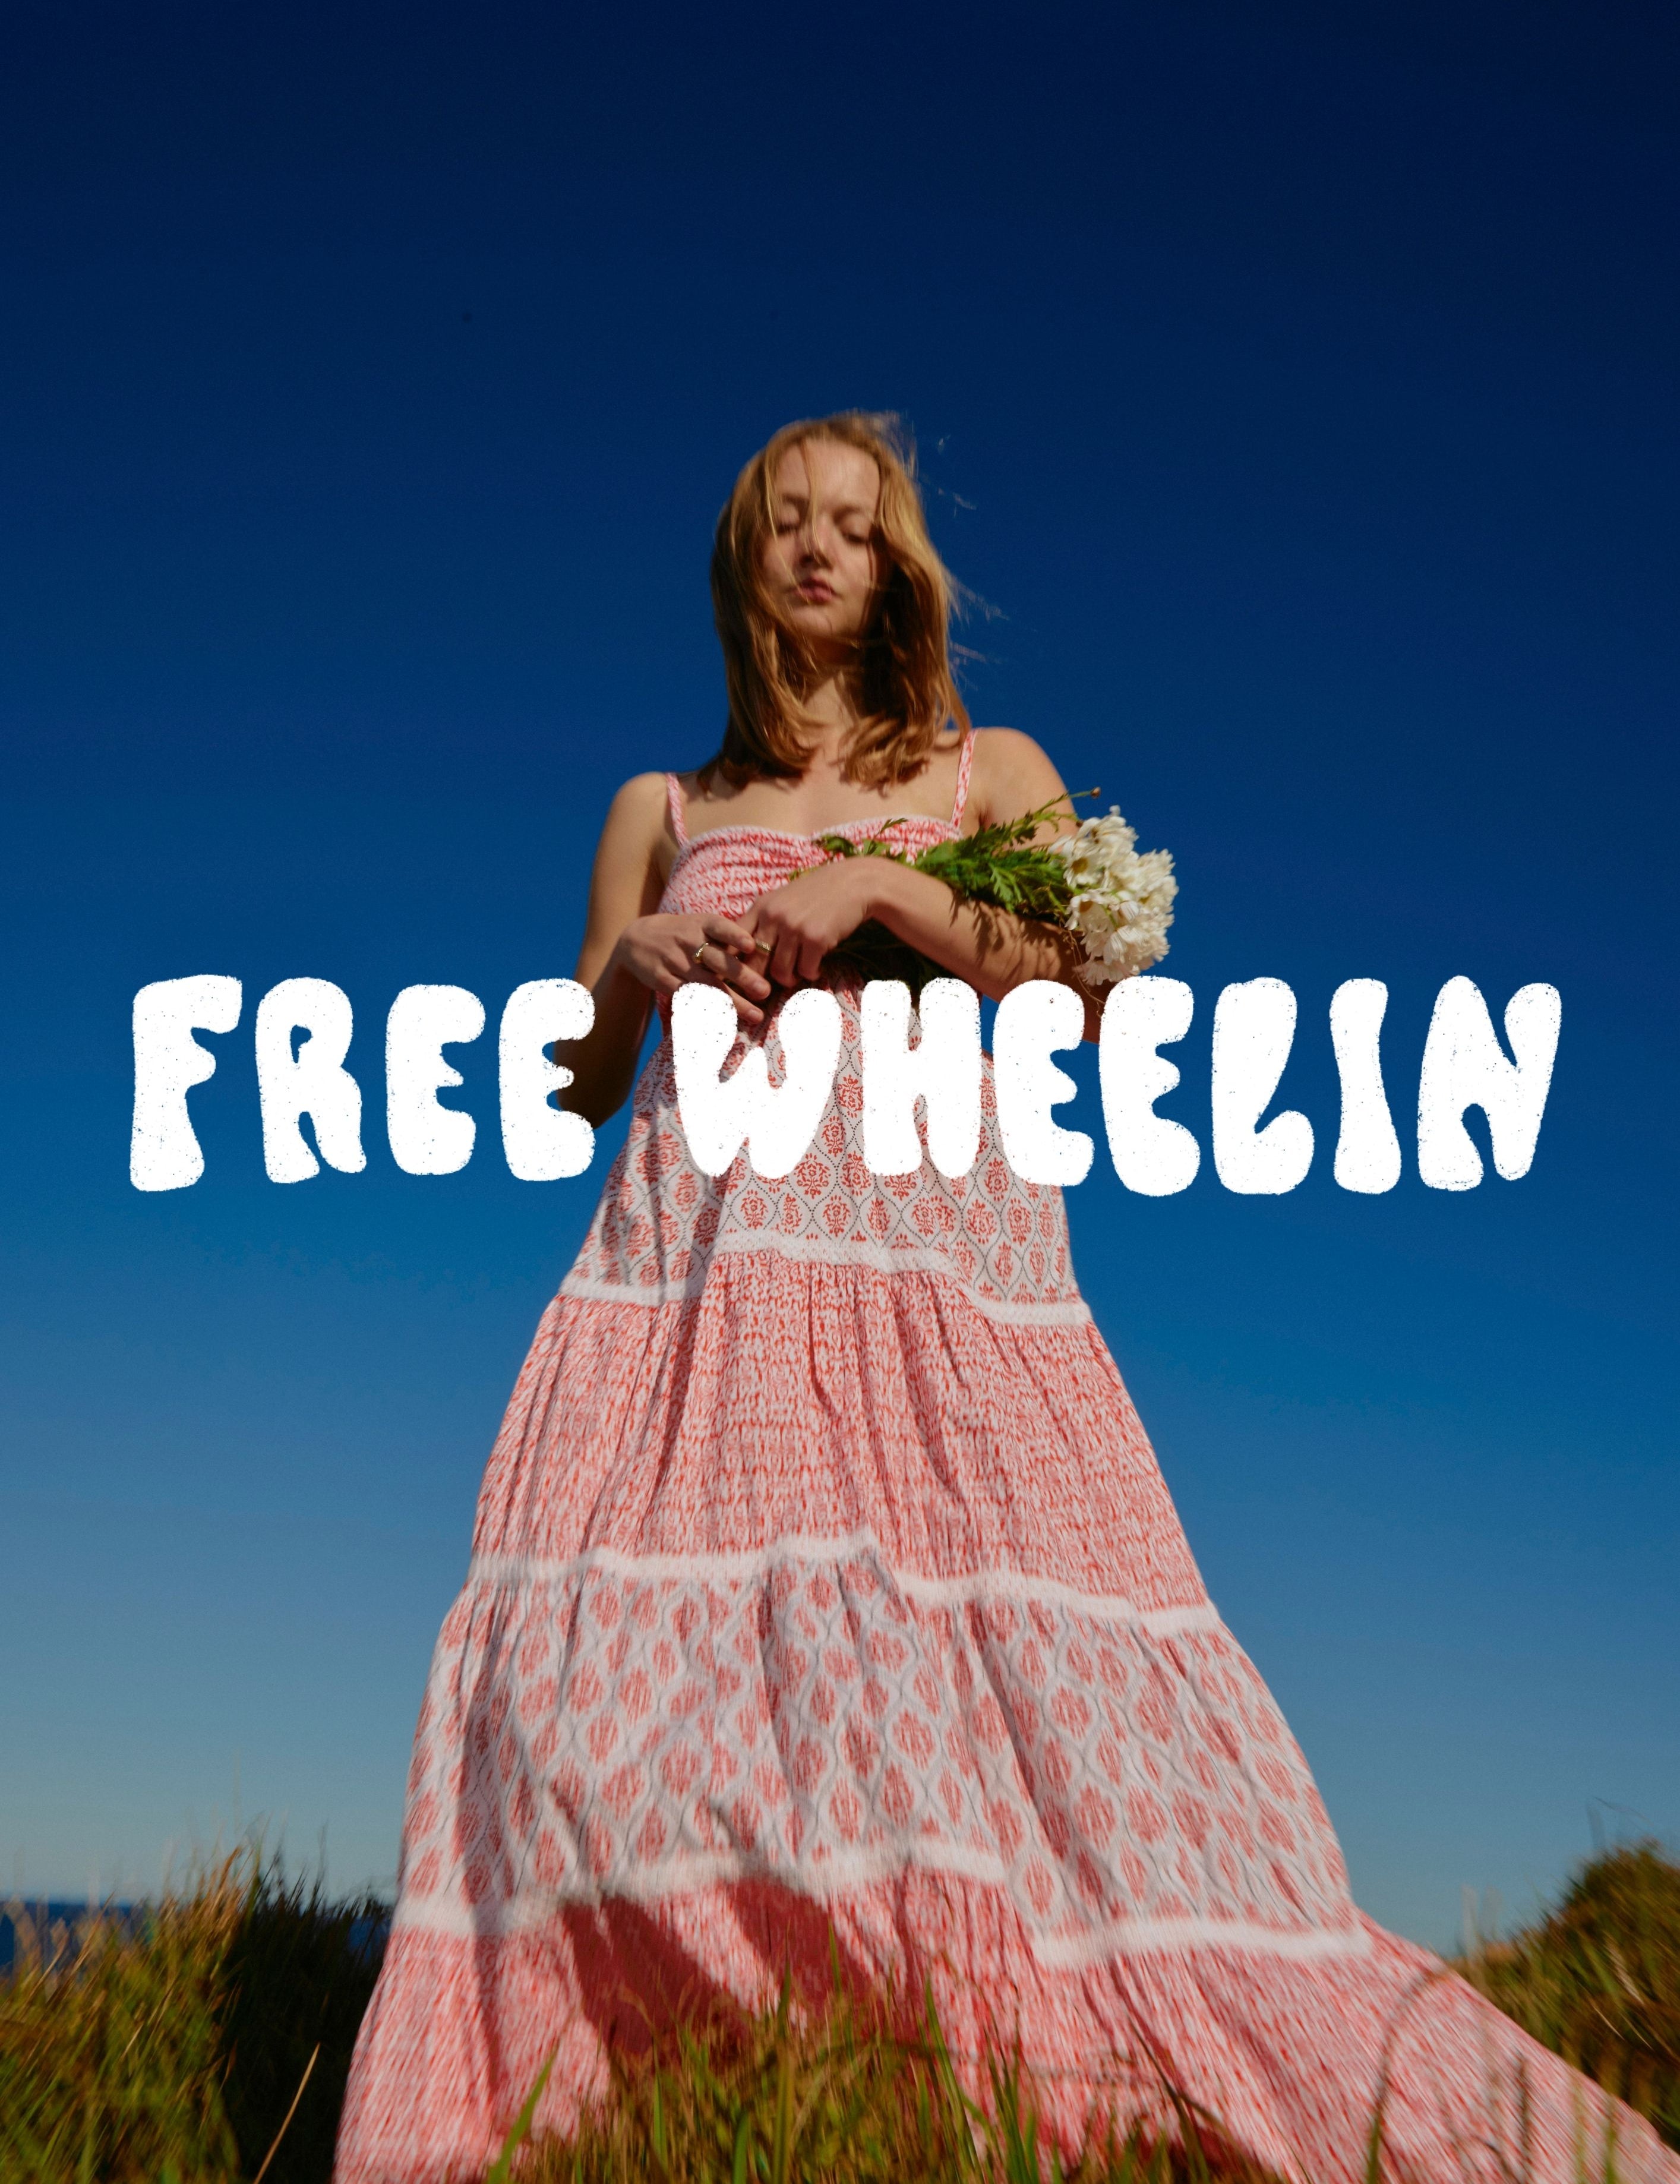 Free Wheelin'